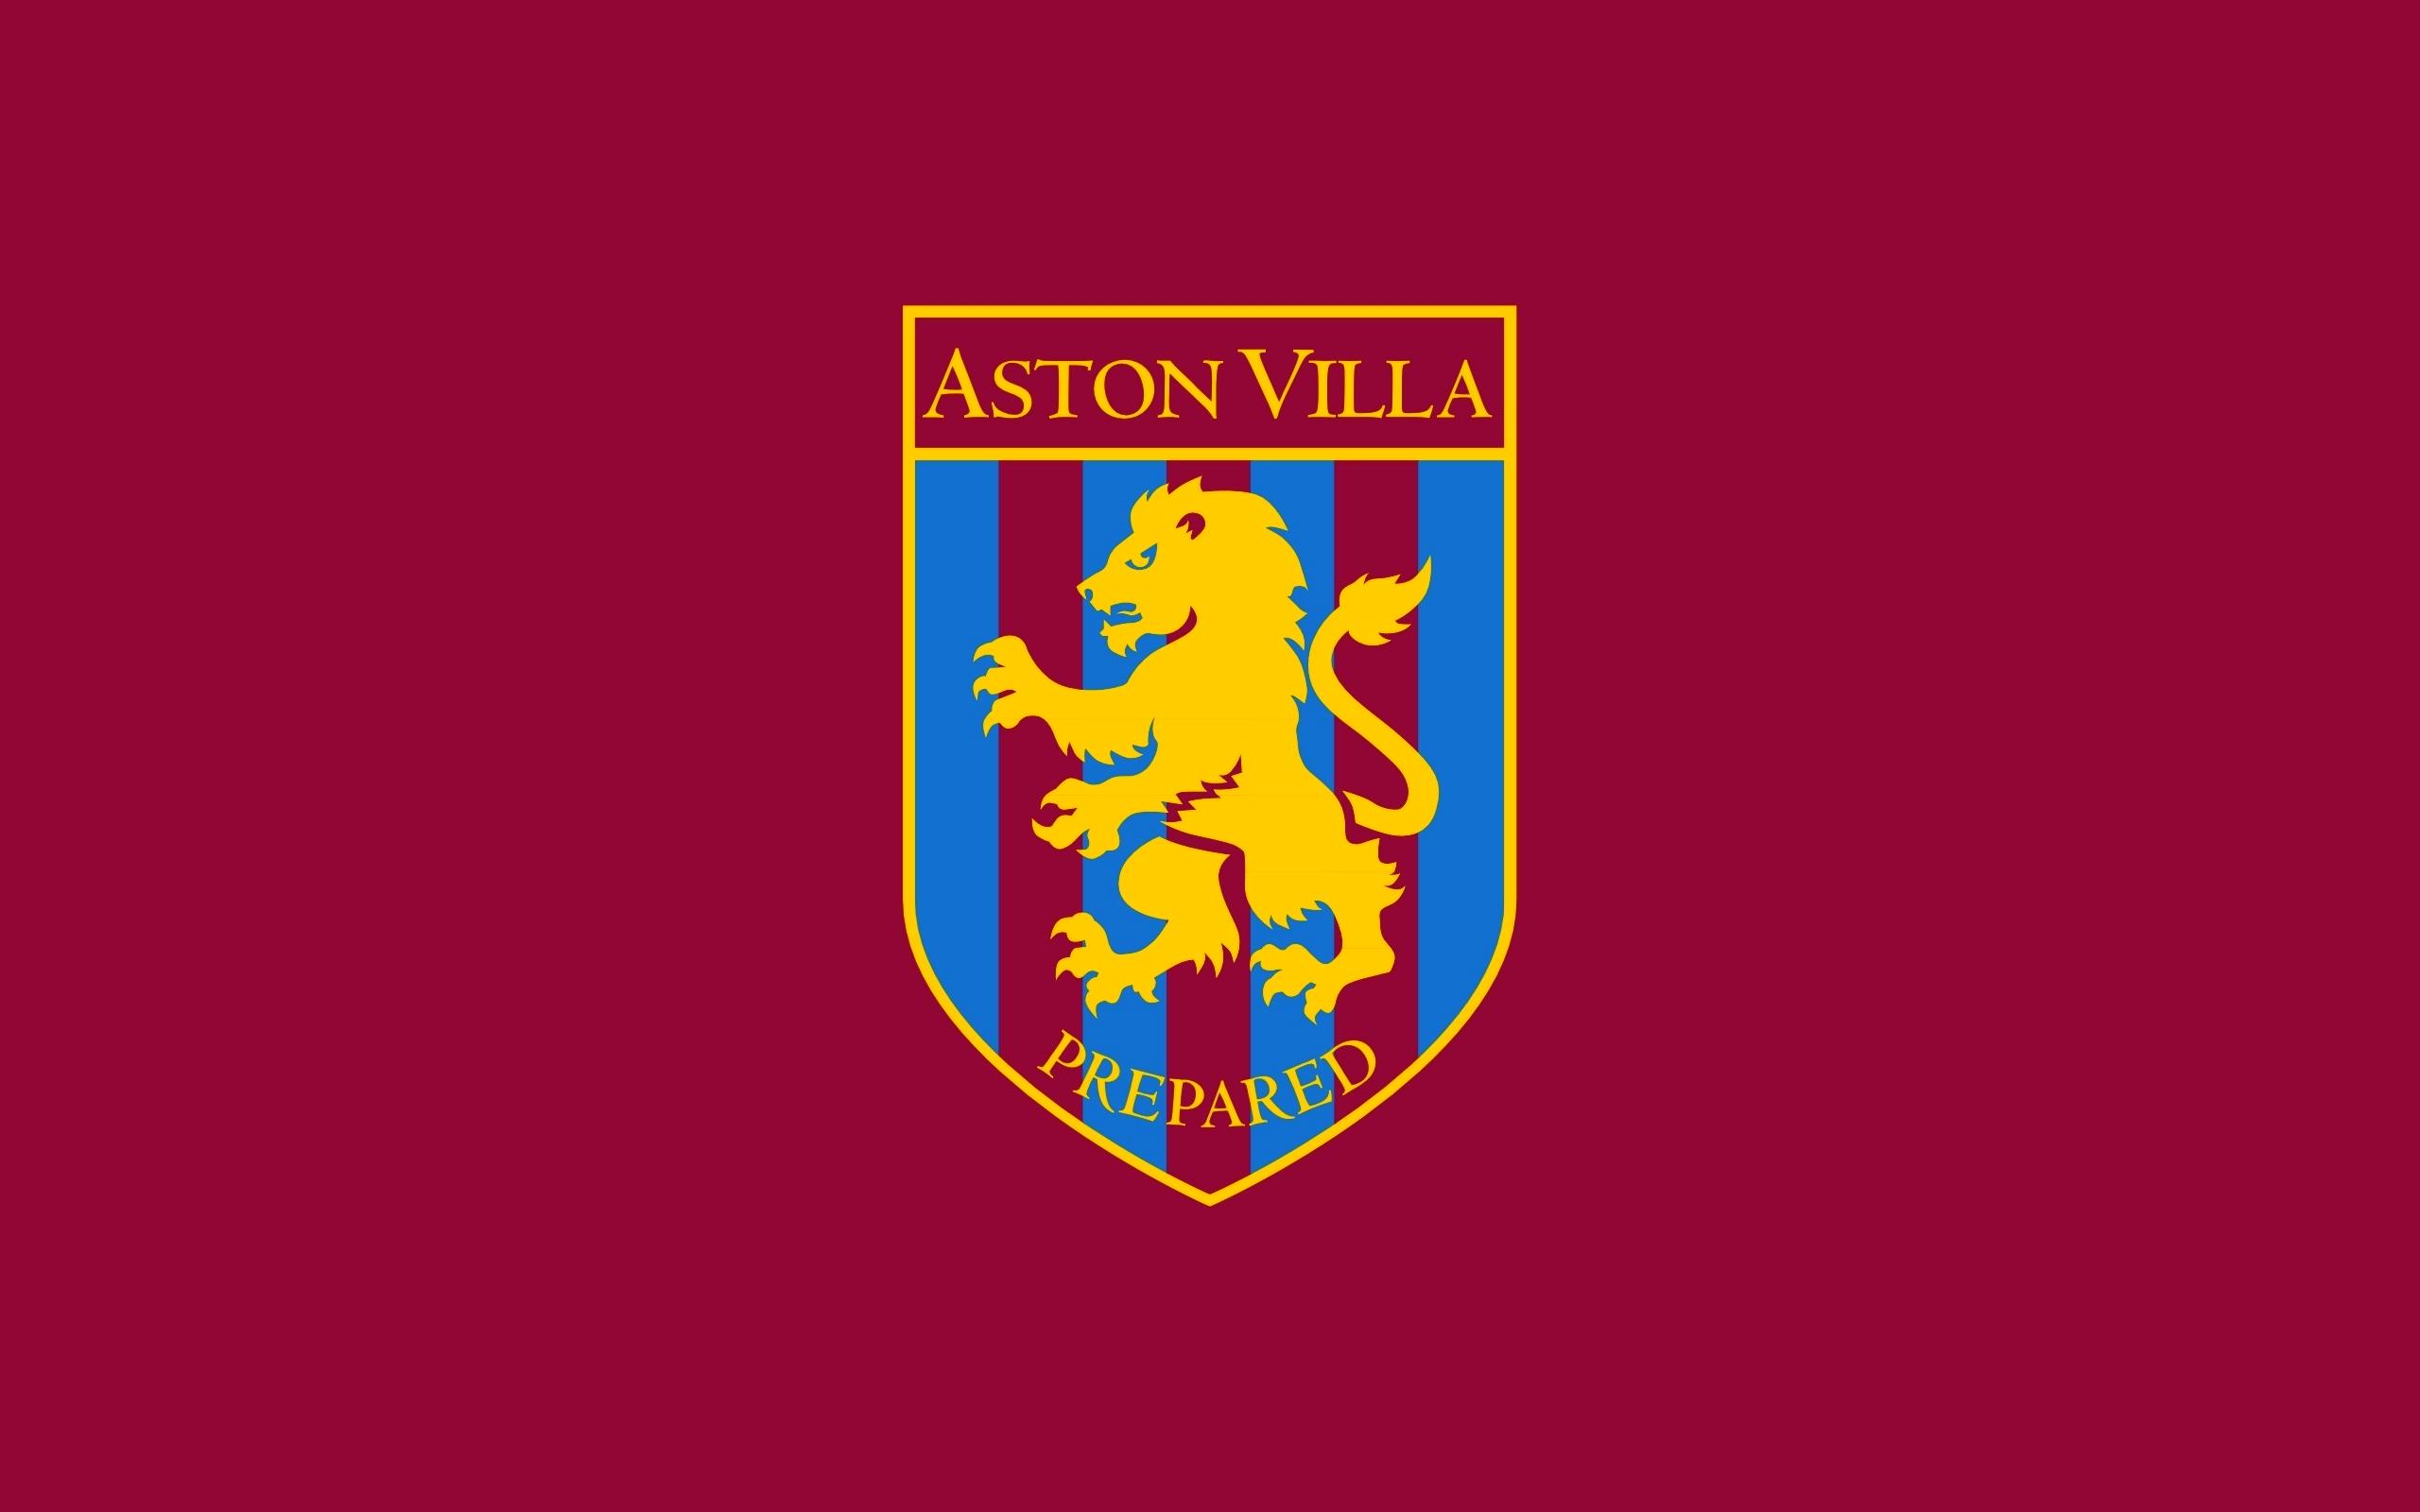 Aston Villa Prepared Primary logo t shirt iron on transfers...